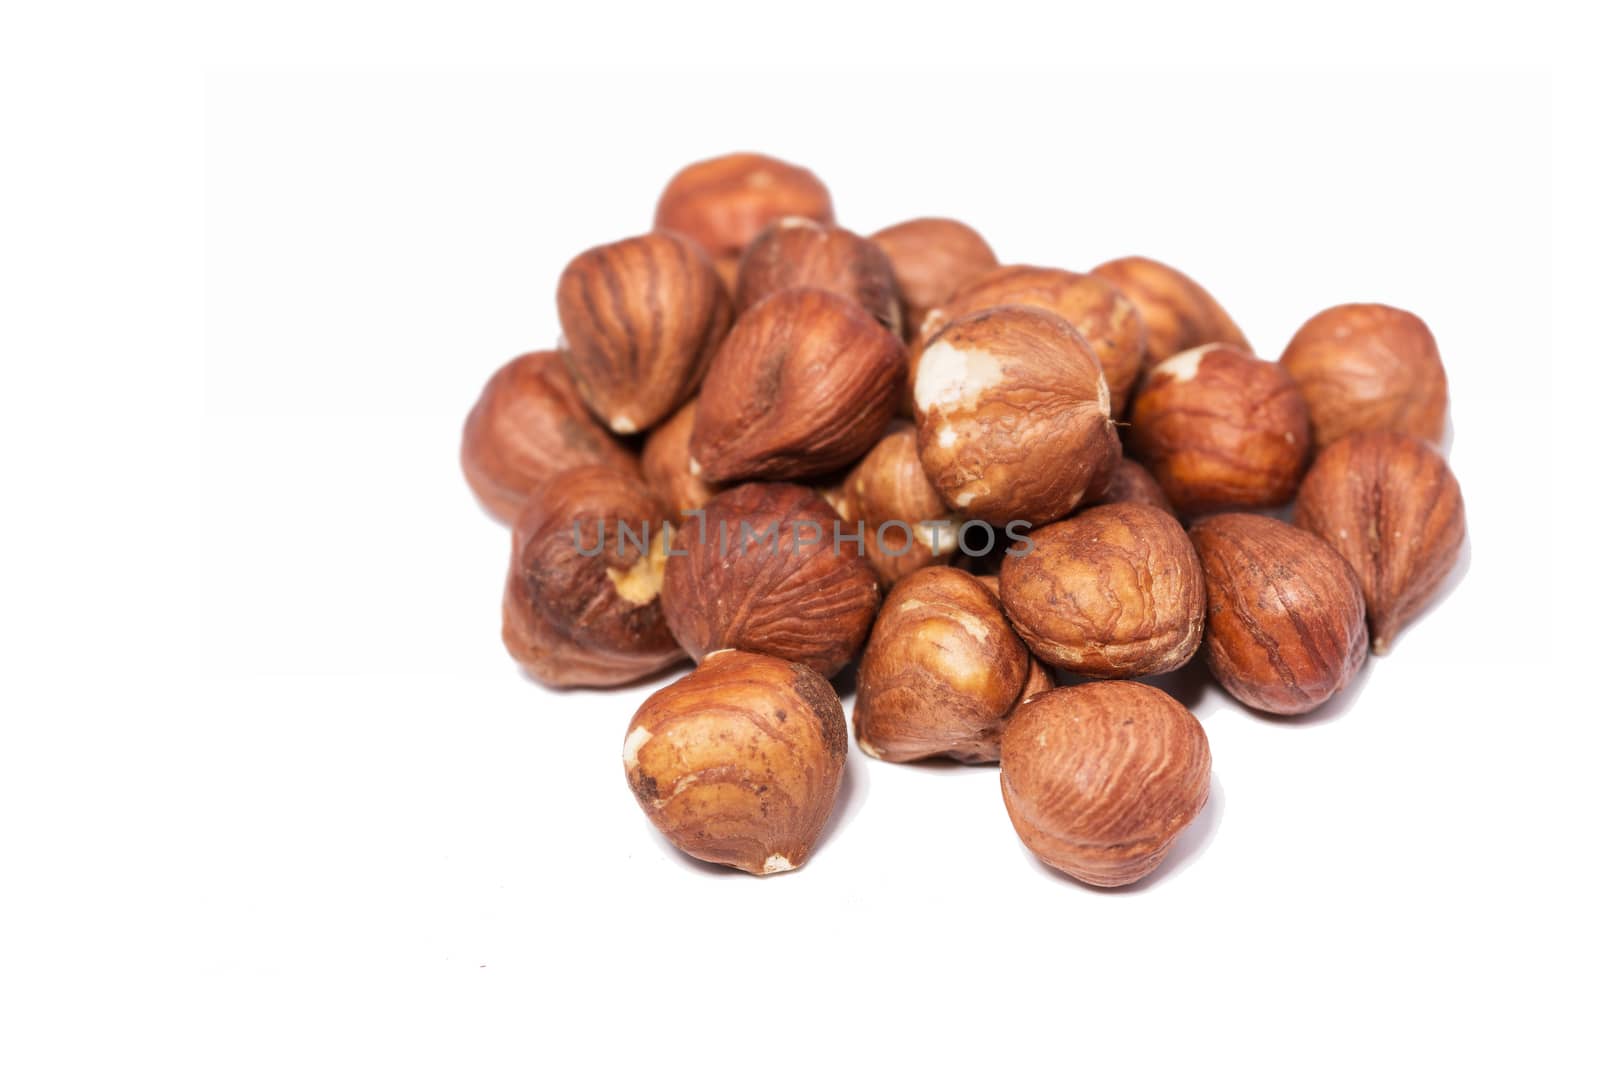 Many brown hazelnuts on white background